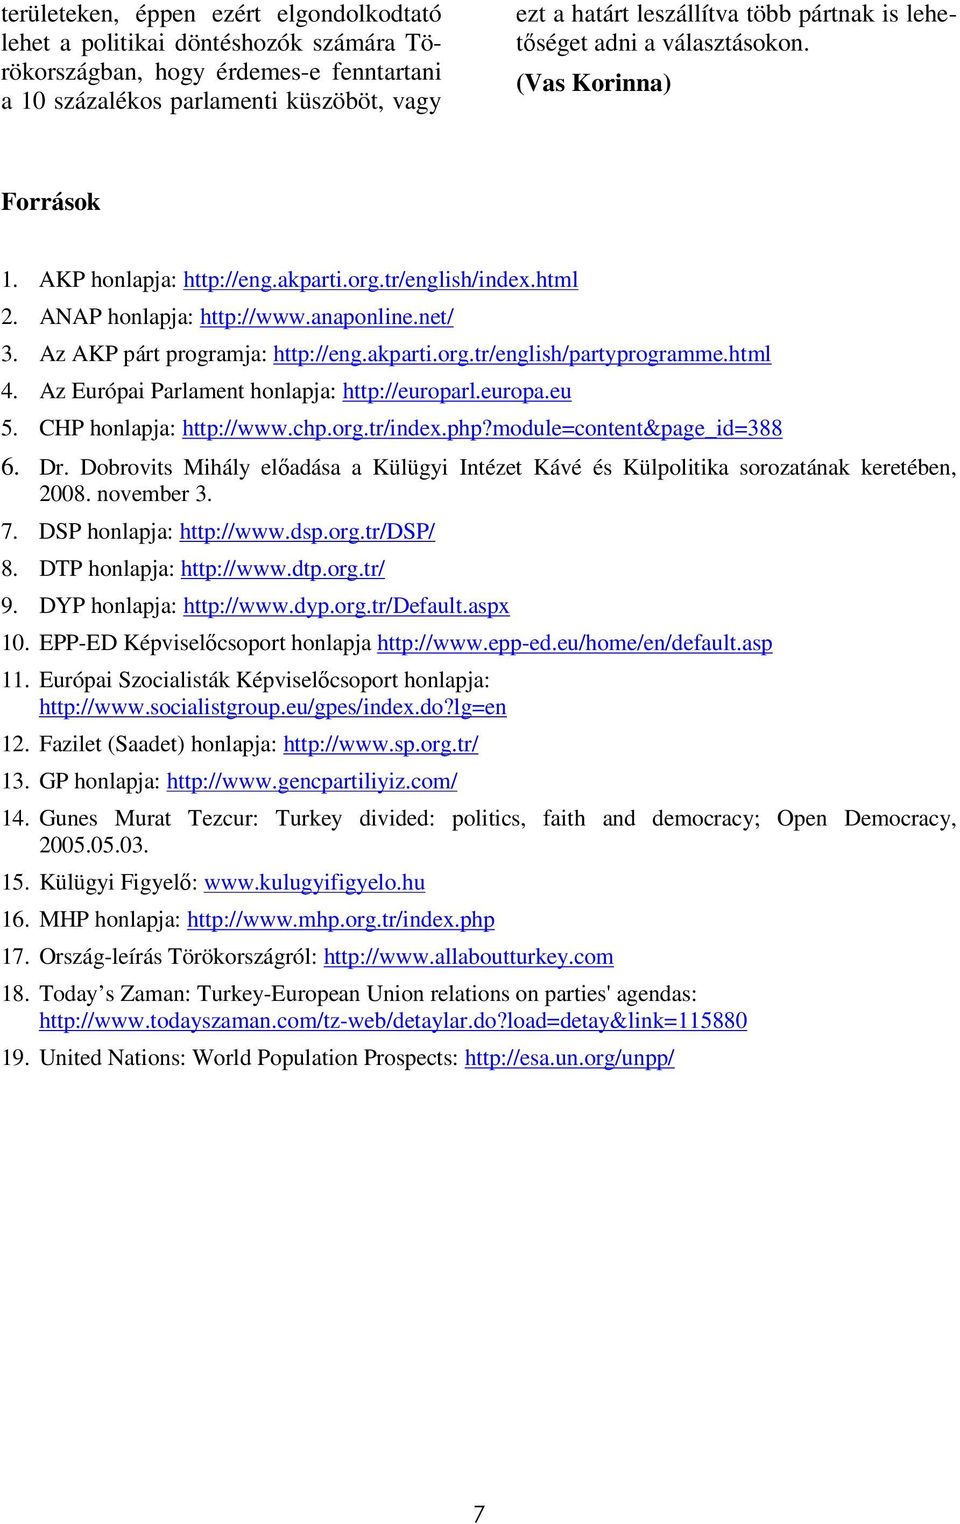 Az AKP párt programja: http://eng.akparti.org.tr/english/partyprogramme.html 4. Az Európai Parlament honlapja: http://europarl.europa.eu 5. CHP honlapja: http://www.chp.org.tr/index.php?